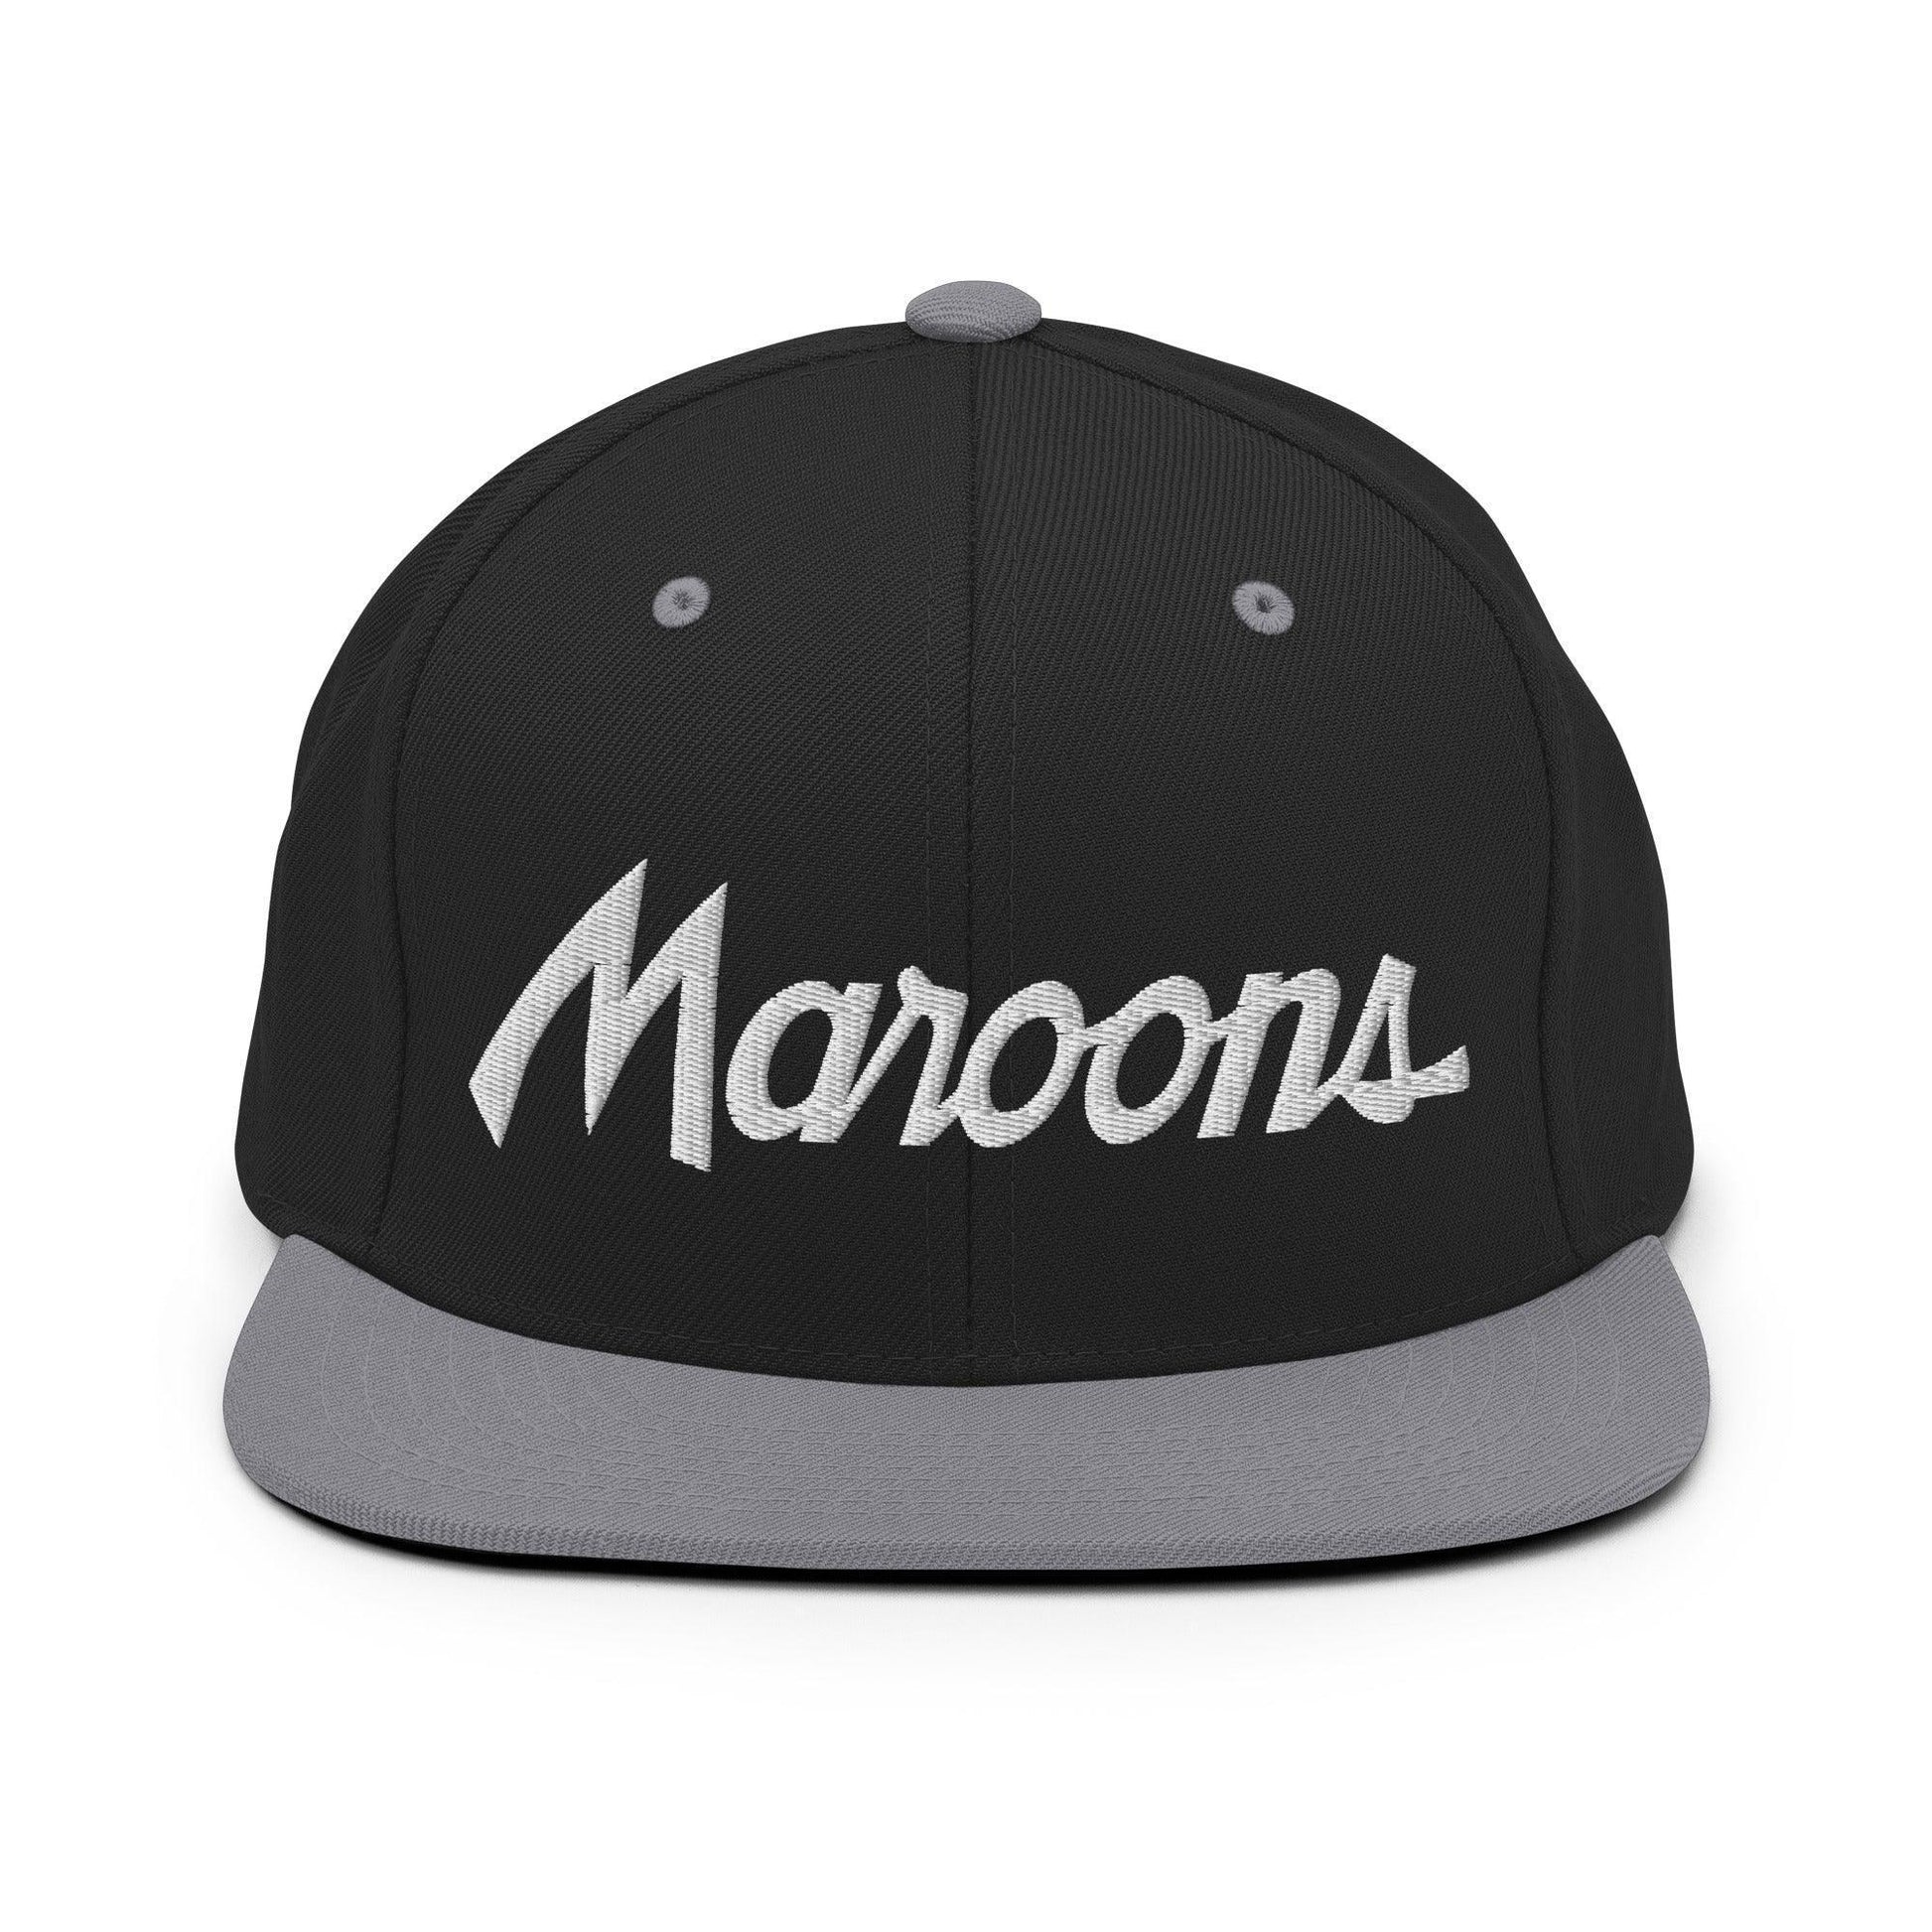 Maroons School Mascot Script Snapback Hat Black/ Silver